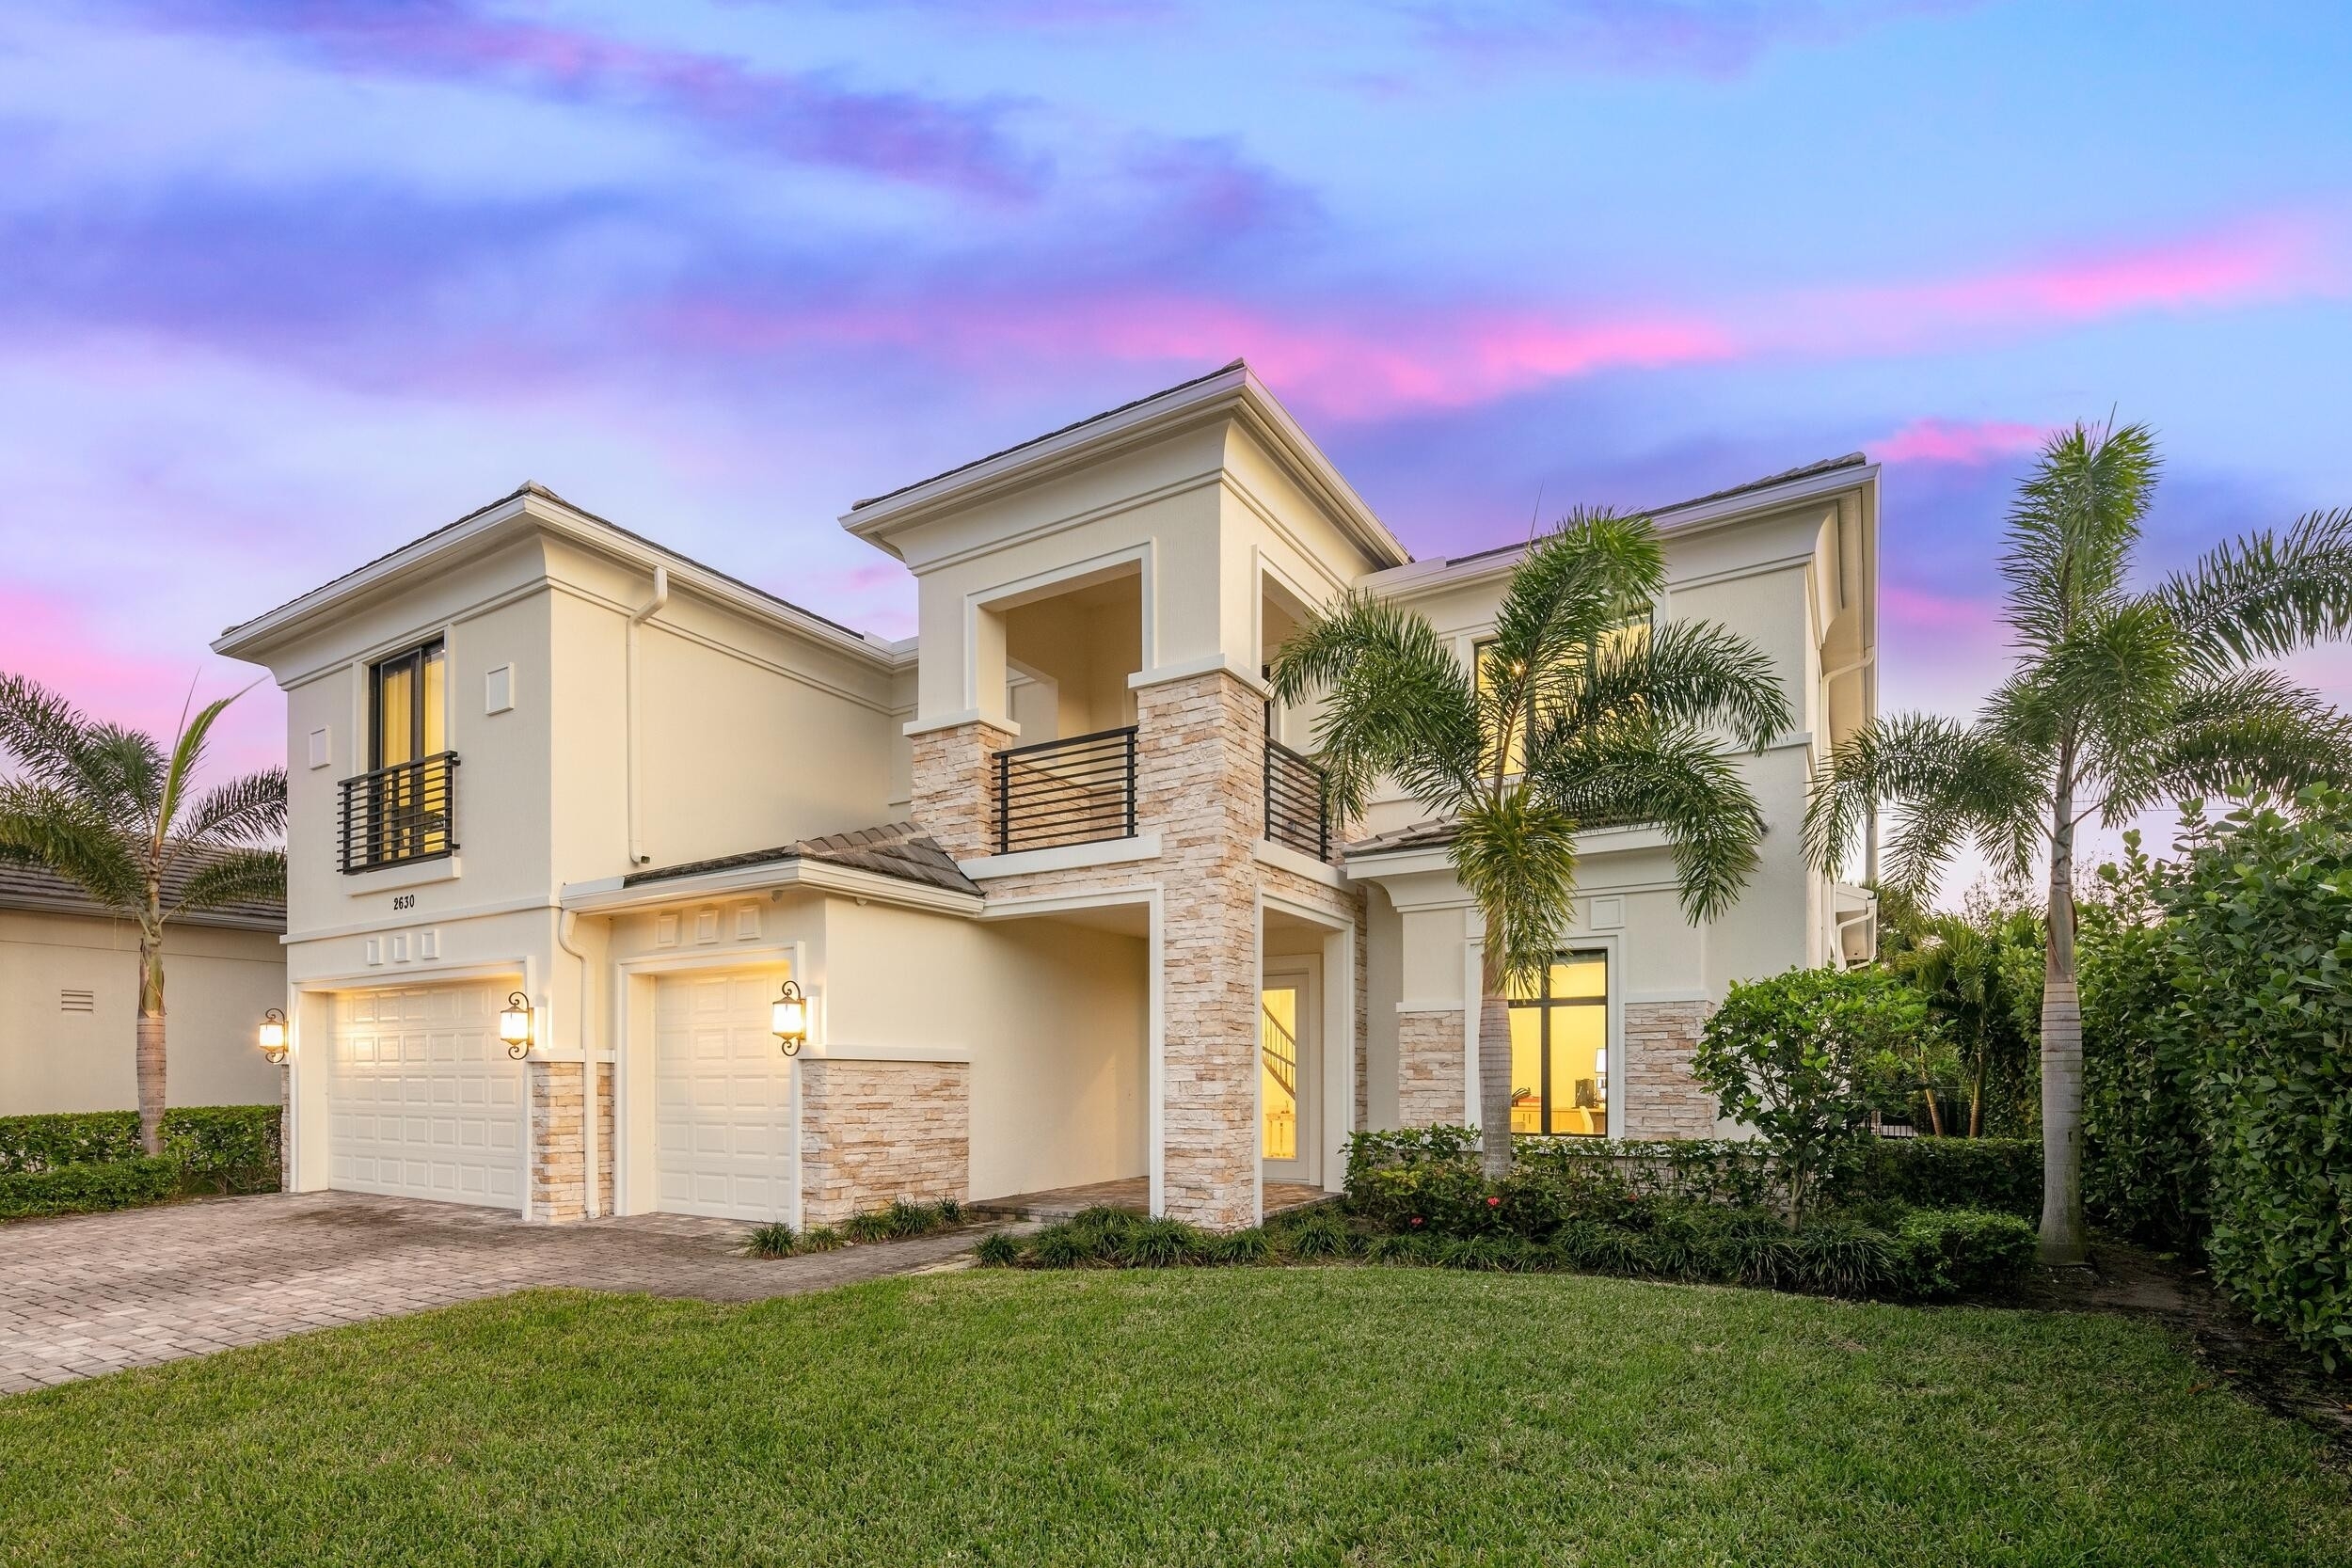 Single Family Home for Sale at Boca Raton, Florida 33496